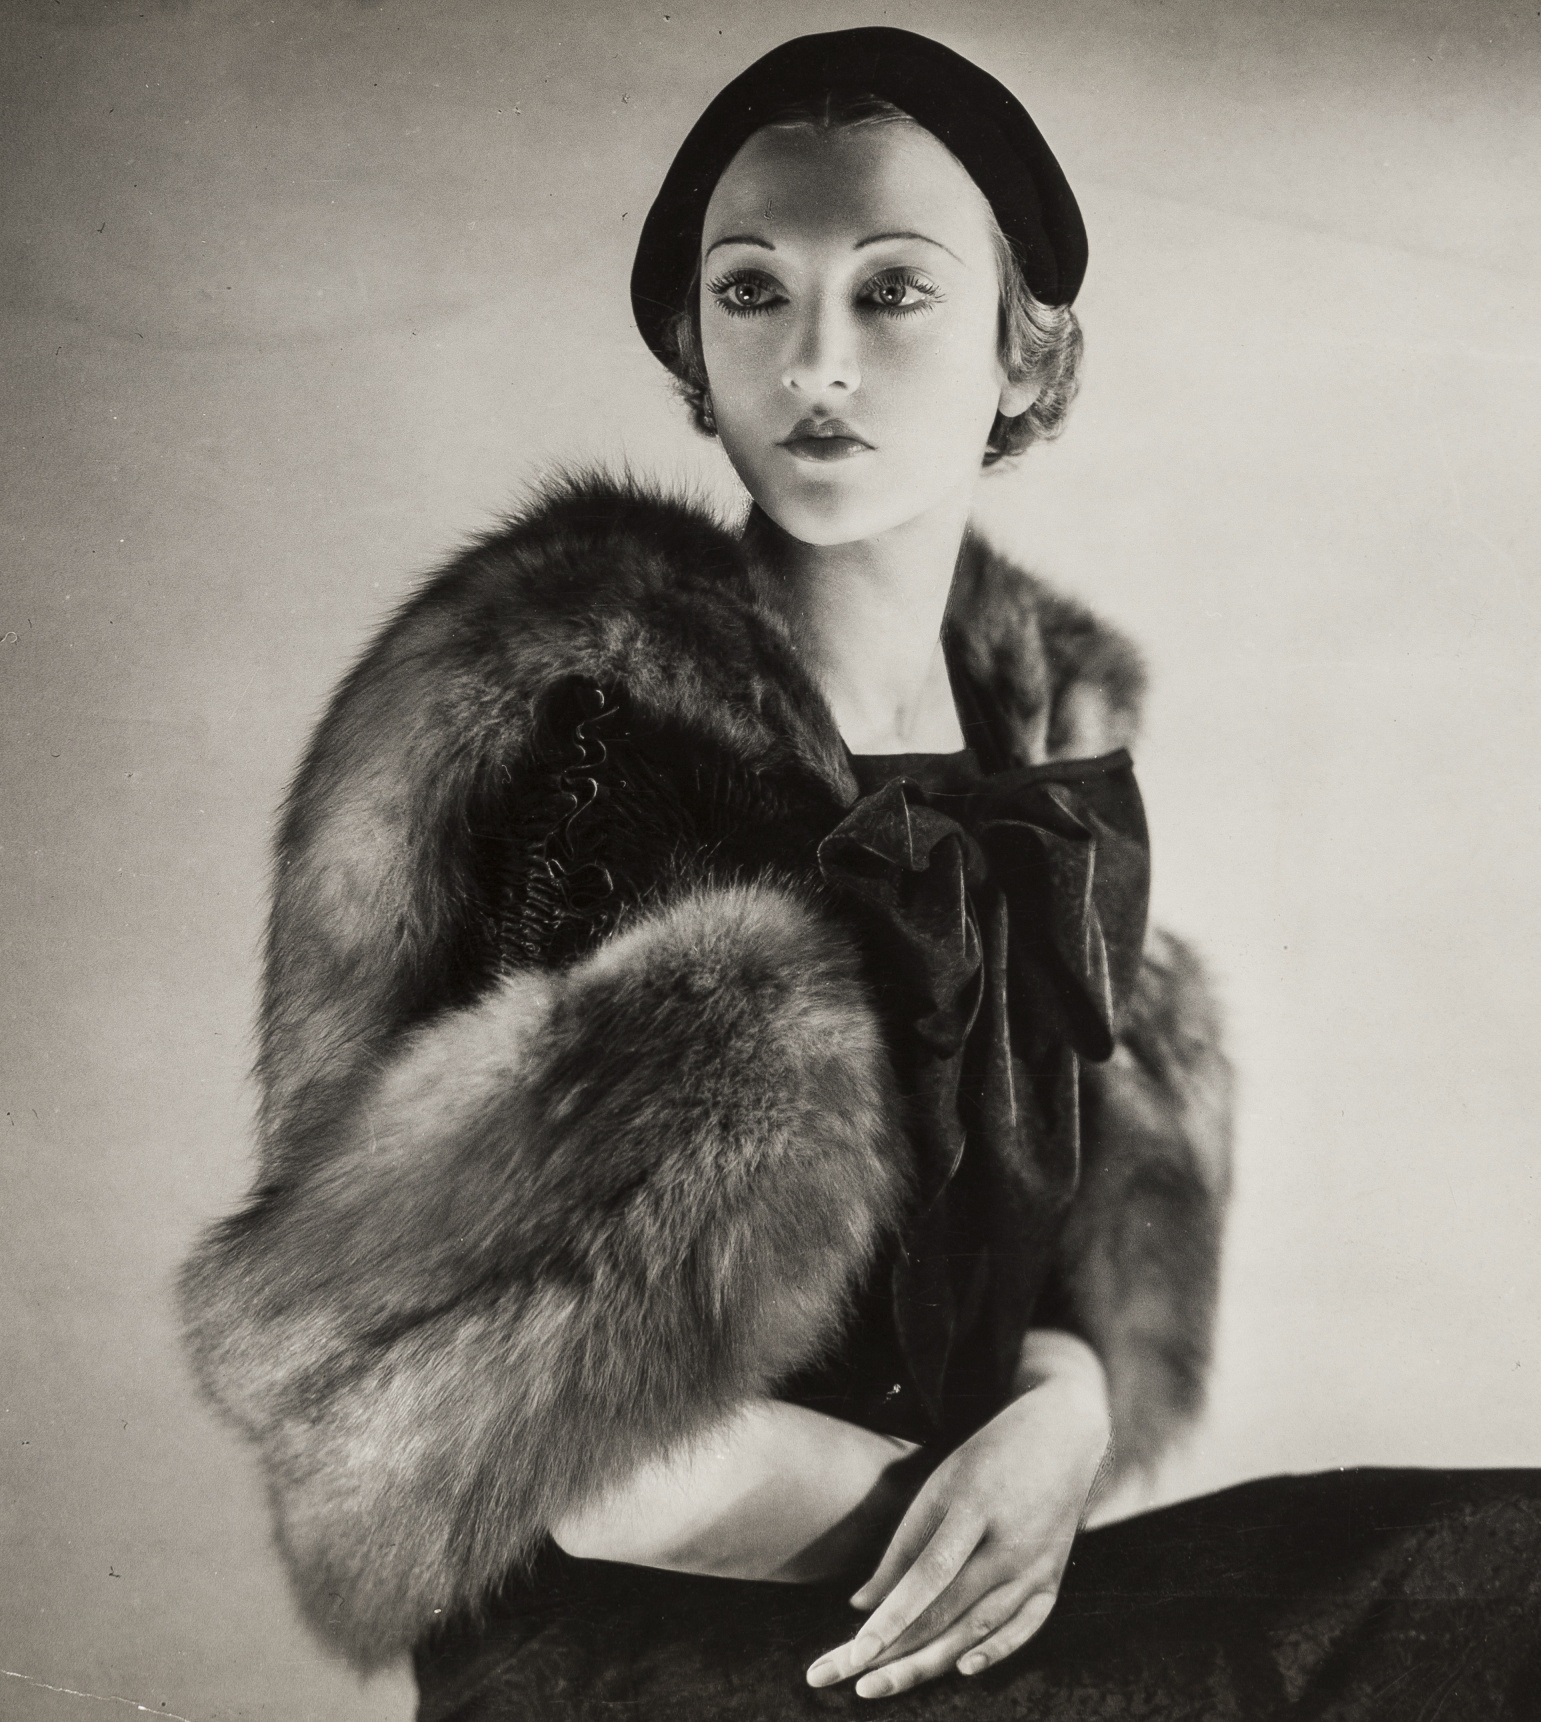 H.E. Deutsch Photographic Studio, Lucien Lelong Design, 1930s